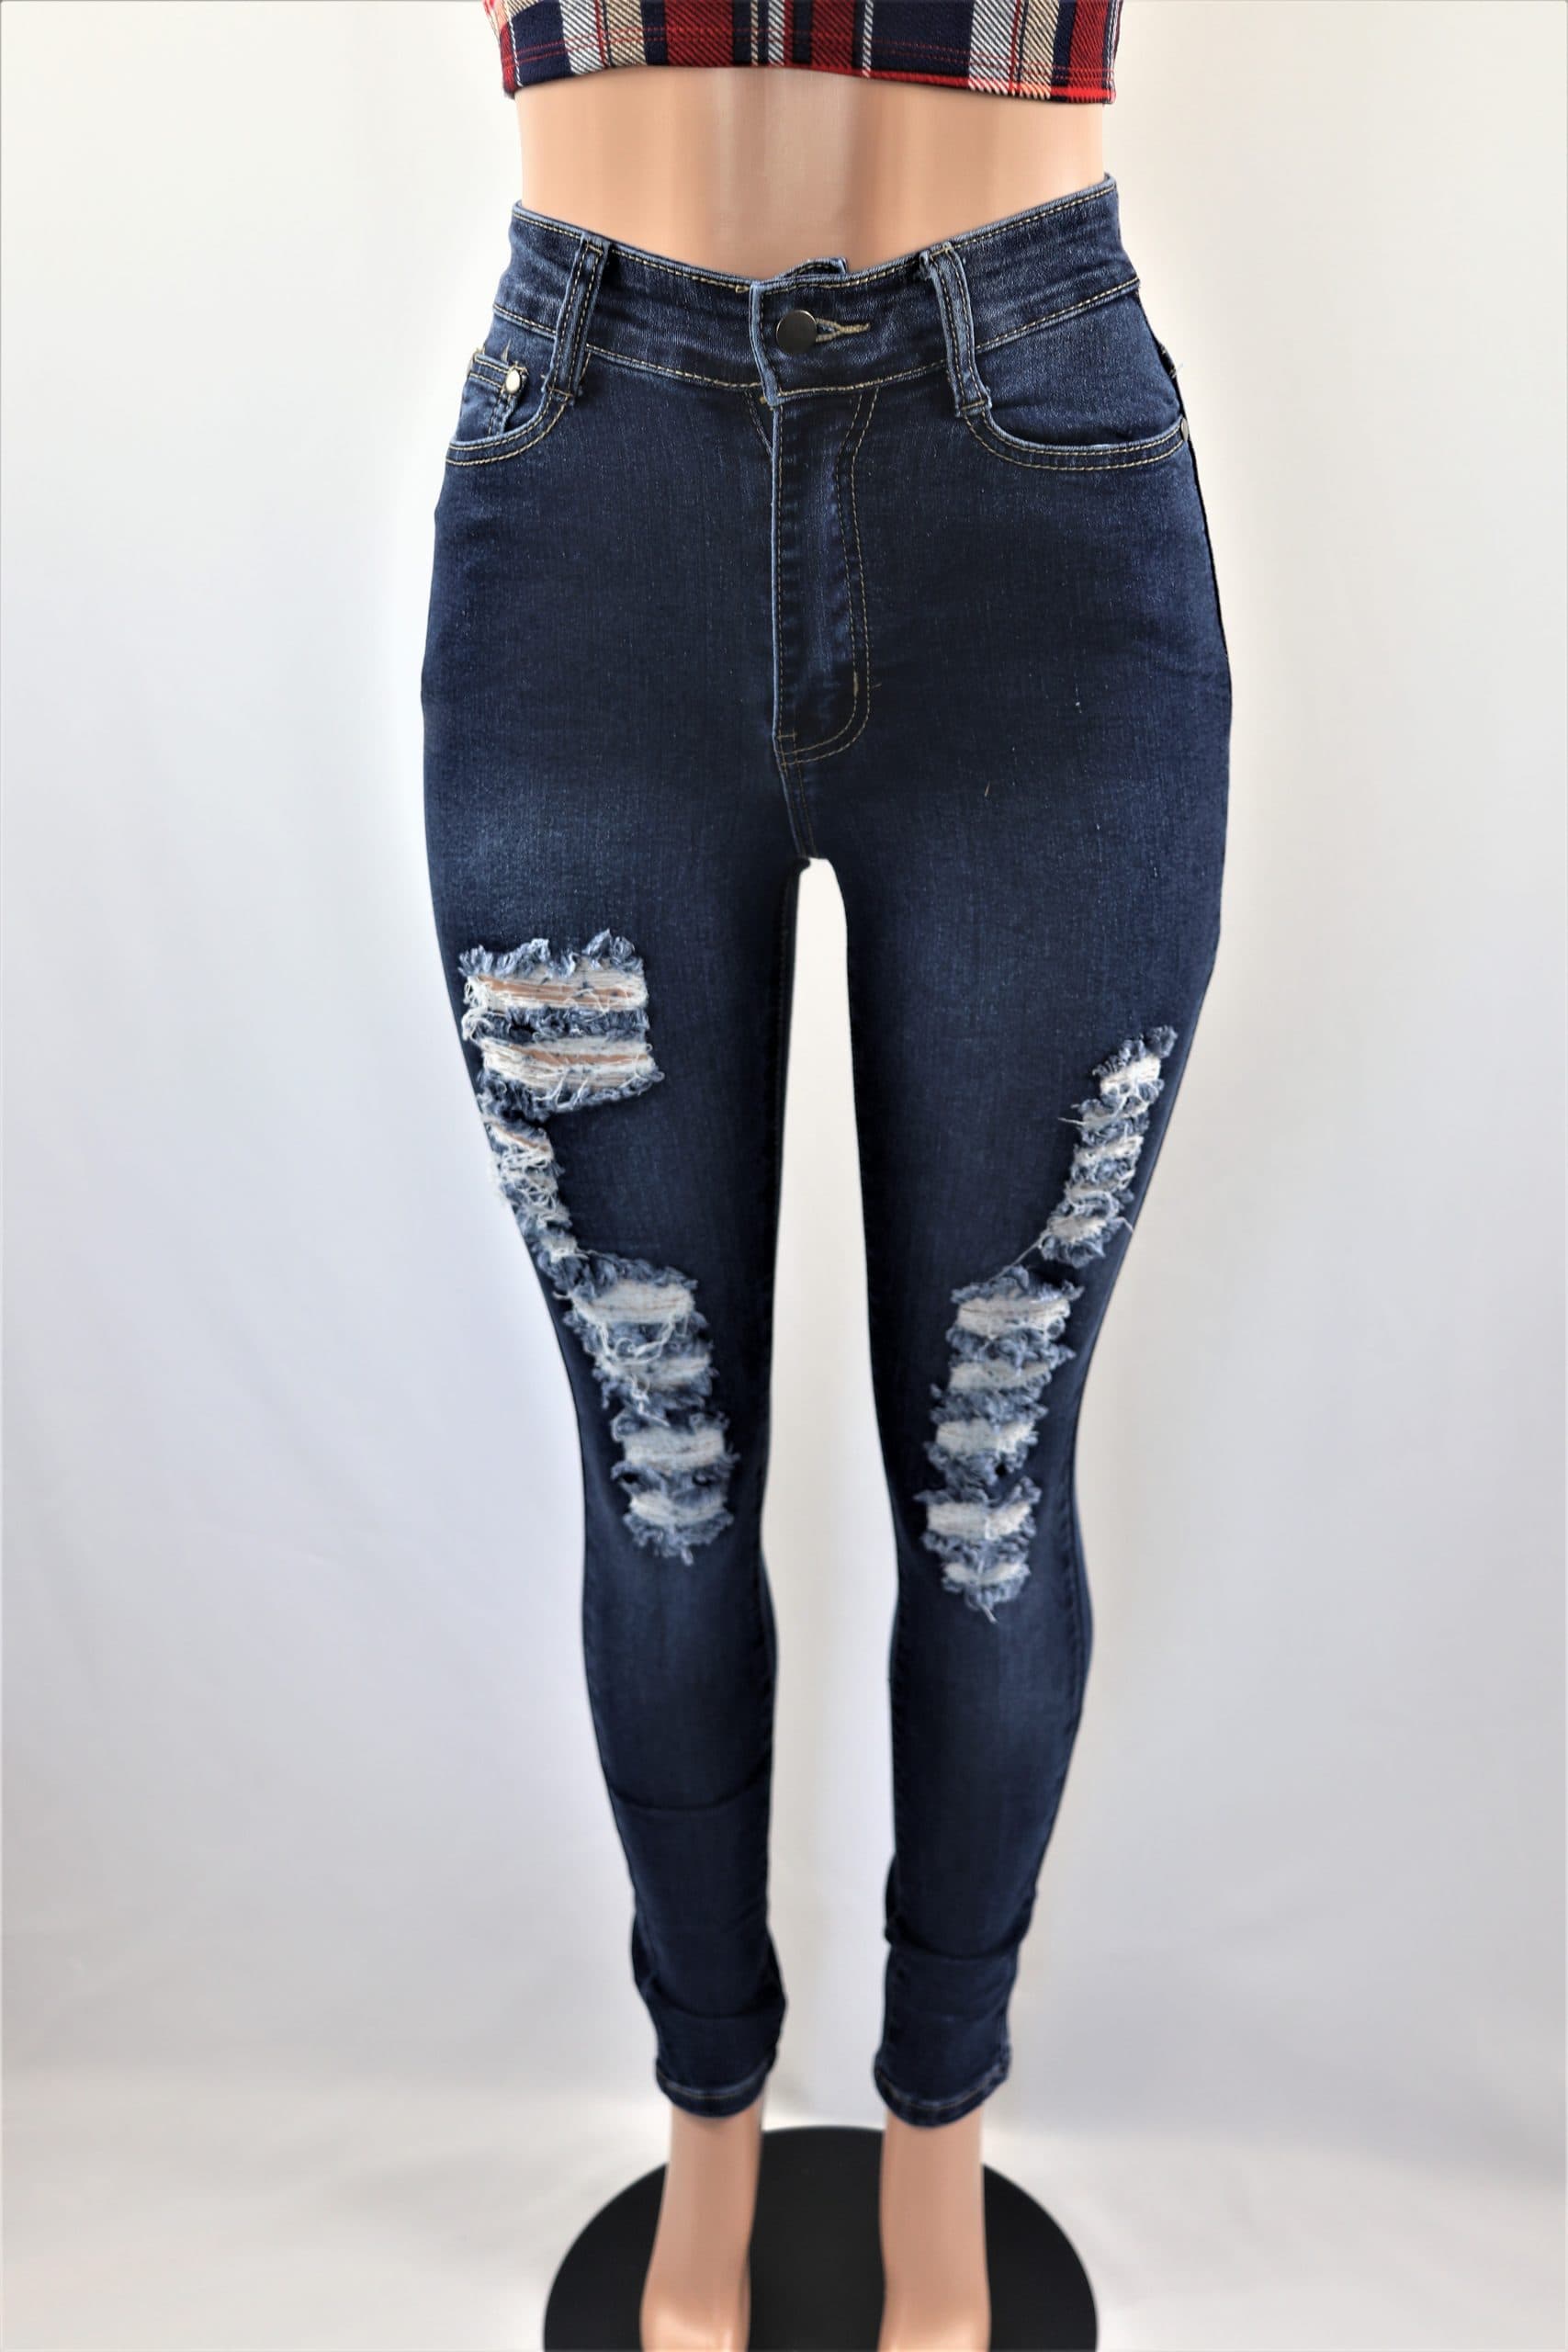 David Jeans - Dark high waist ripped skinny jeans.